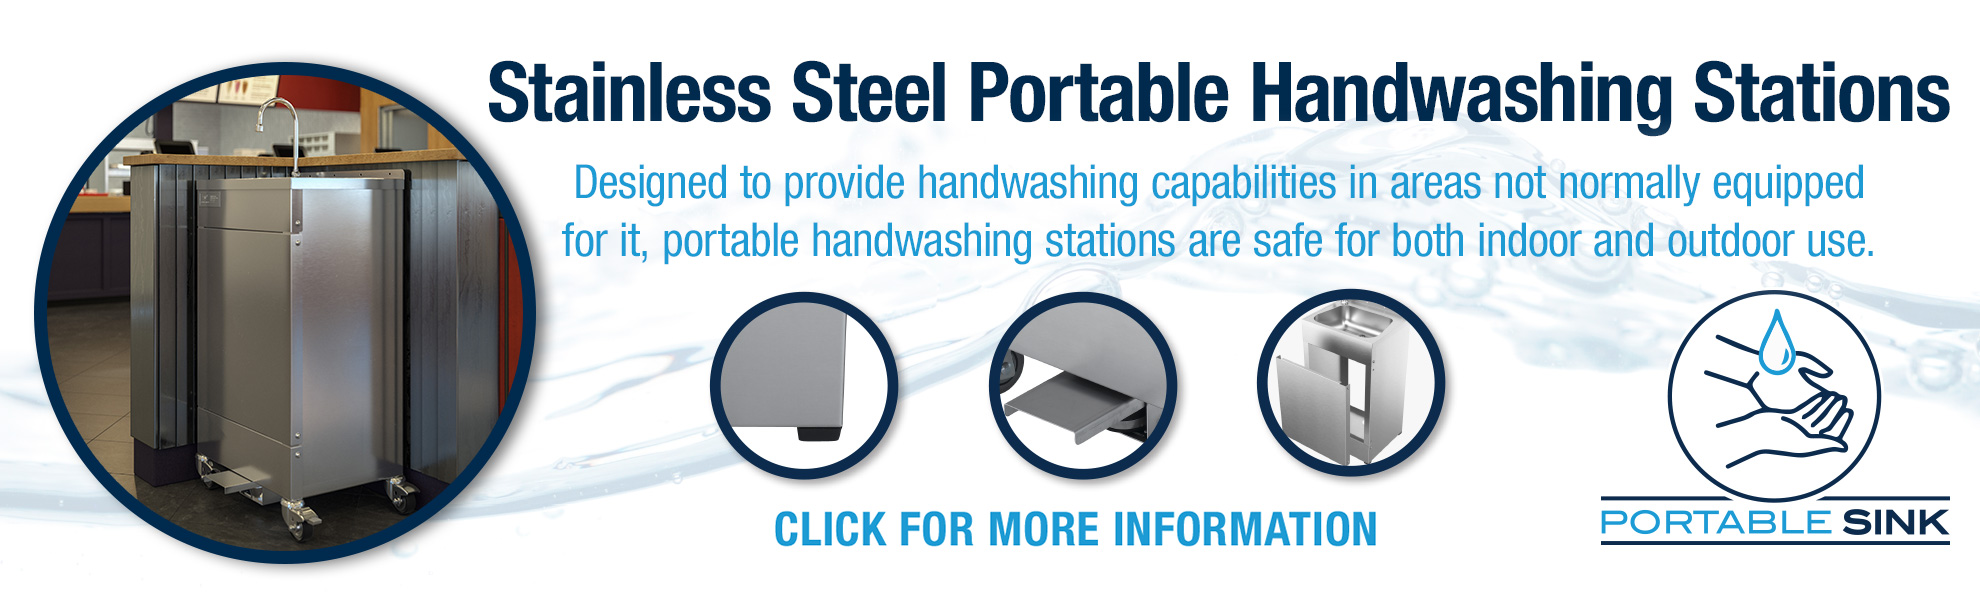 Stainless Steel Portable Handwashing Stations